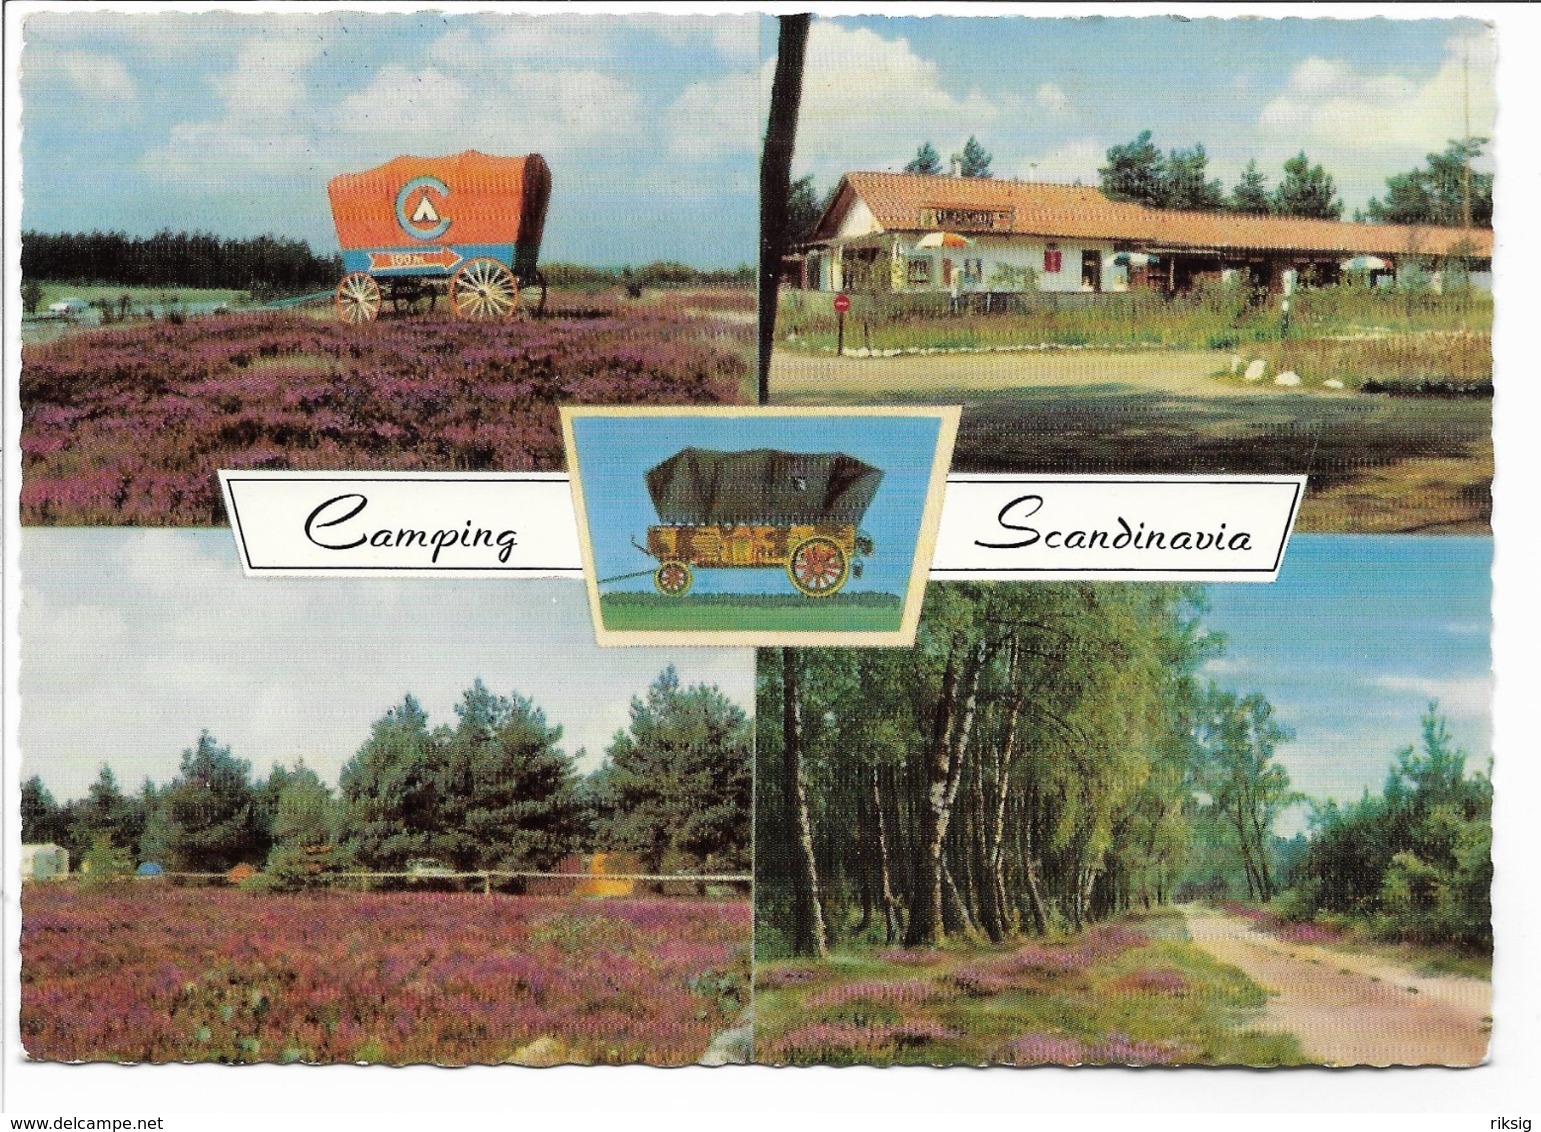 Camping Scandinavia International. Autobahn Hamburg - Hanover.  B-3700 - Soltau